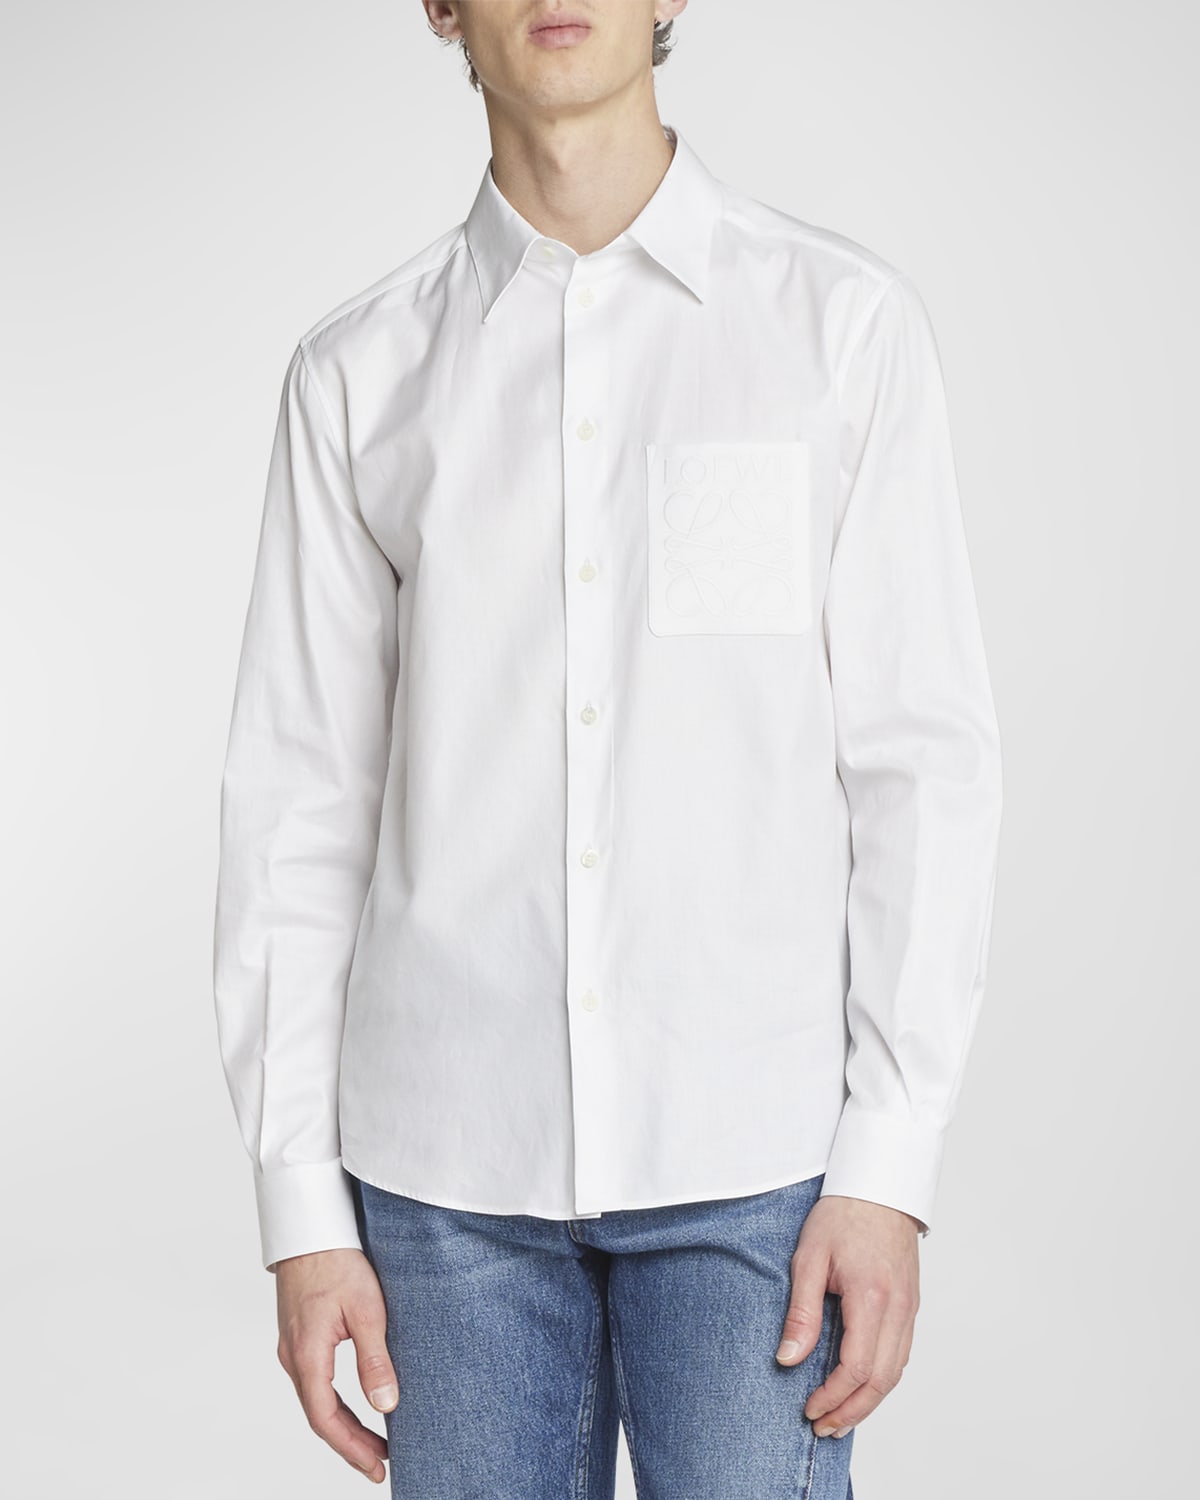 Men's Anagram Pocket Dress Shirt